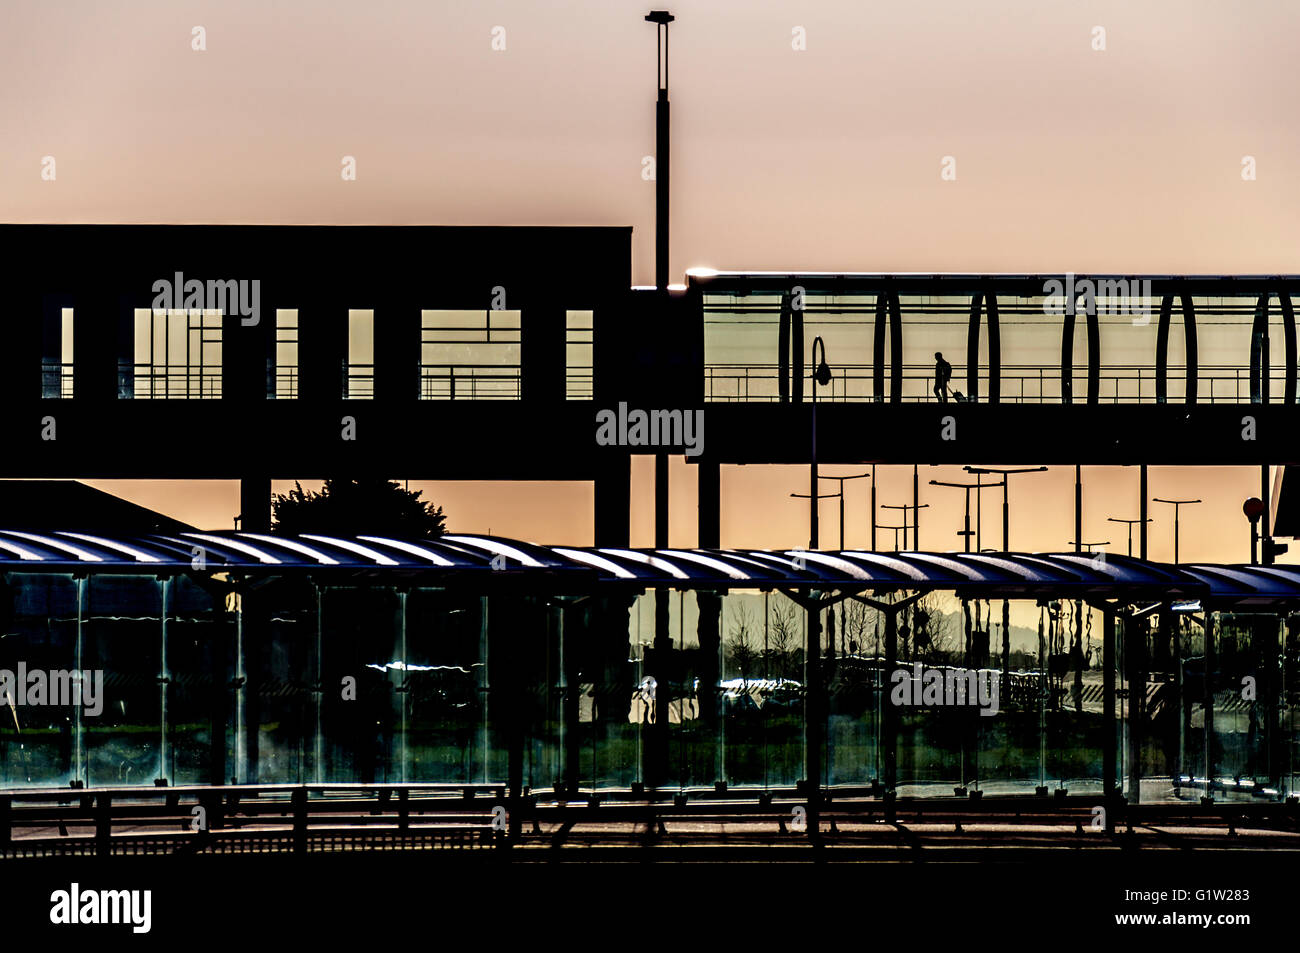 Einsamer Passagier Grafik Architektur, Dublin Airport, Terminal 2, Irland Stockfoto